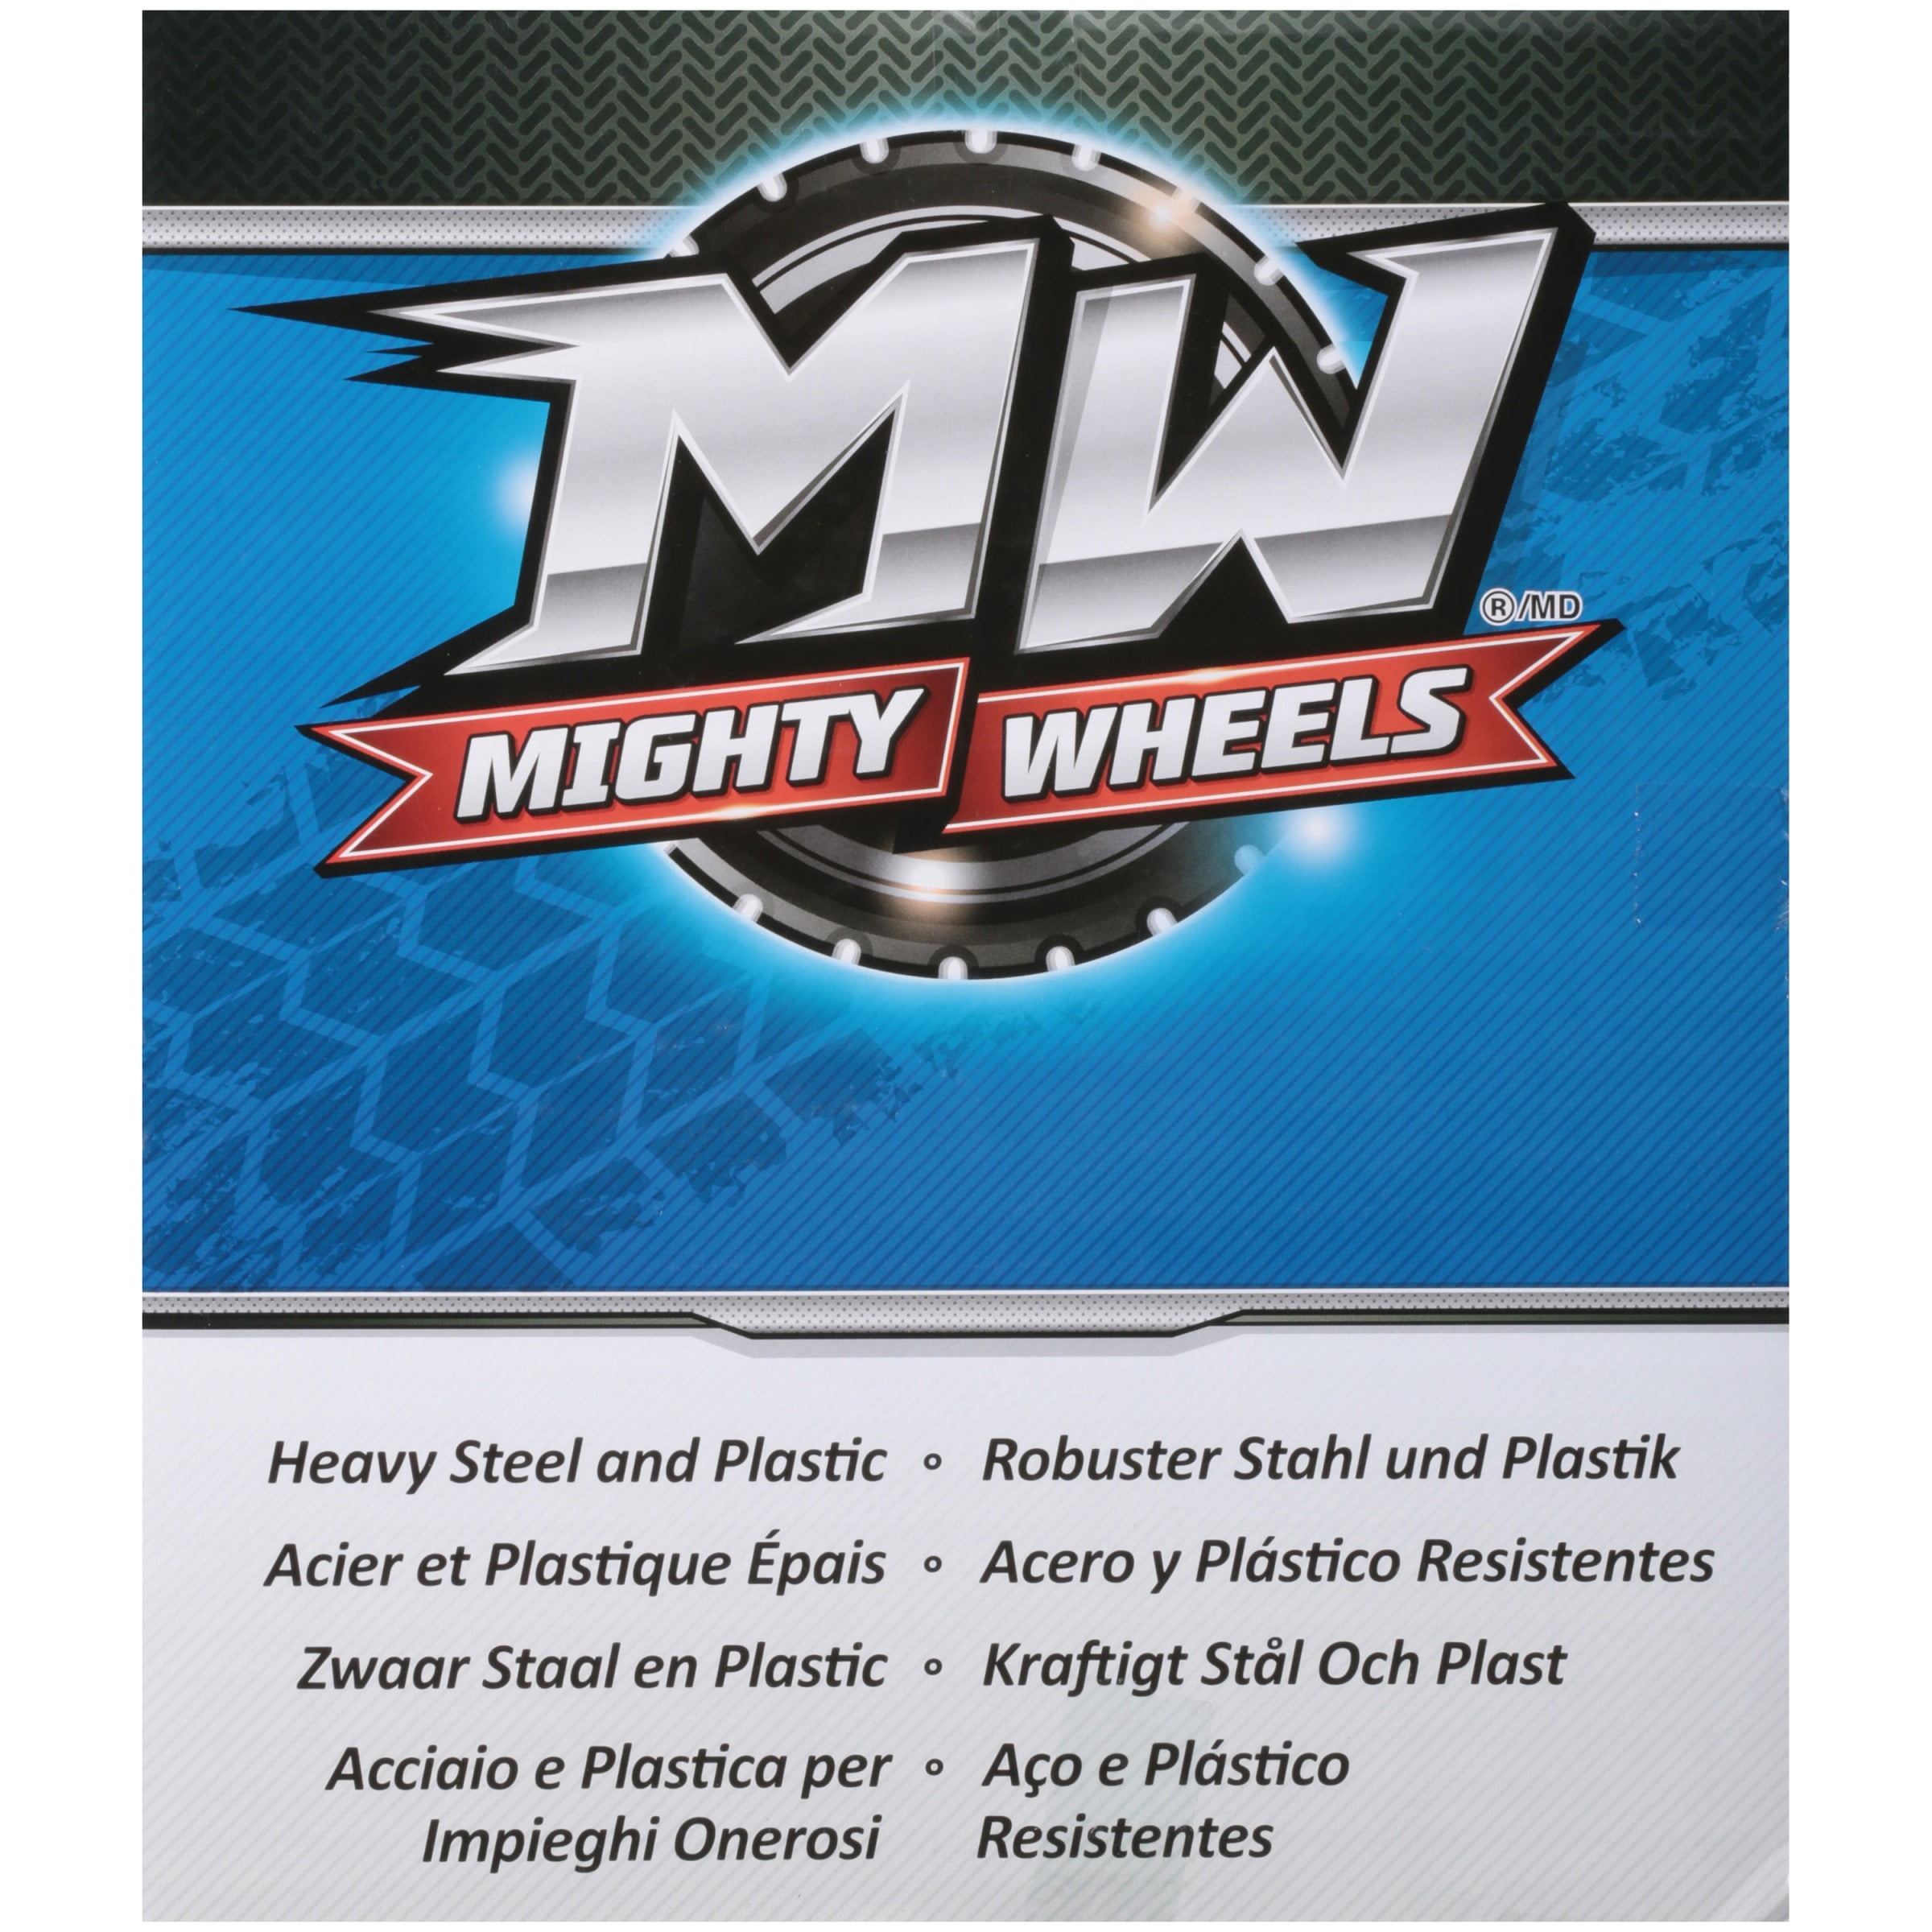 Mighty Wheels Heavy Steel And Plastic Toy Truck Box Walmart Com